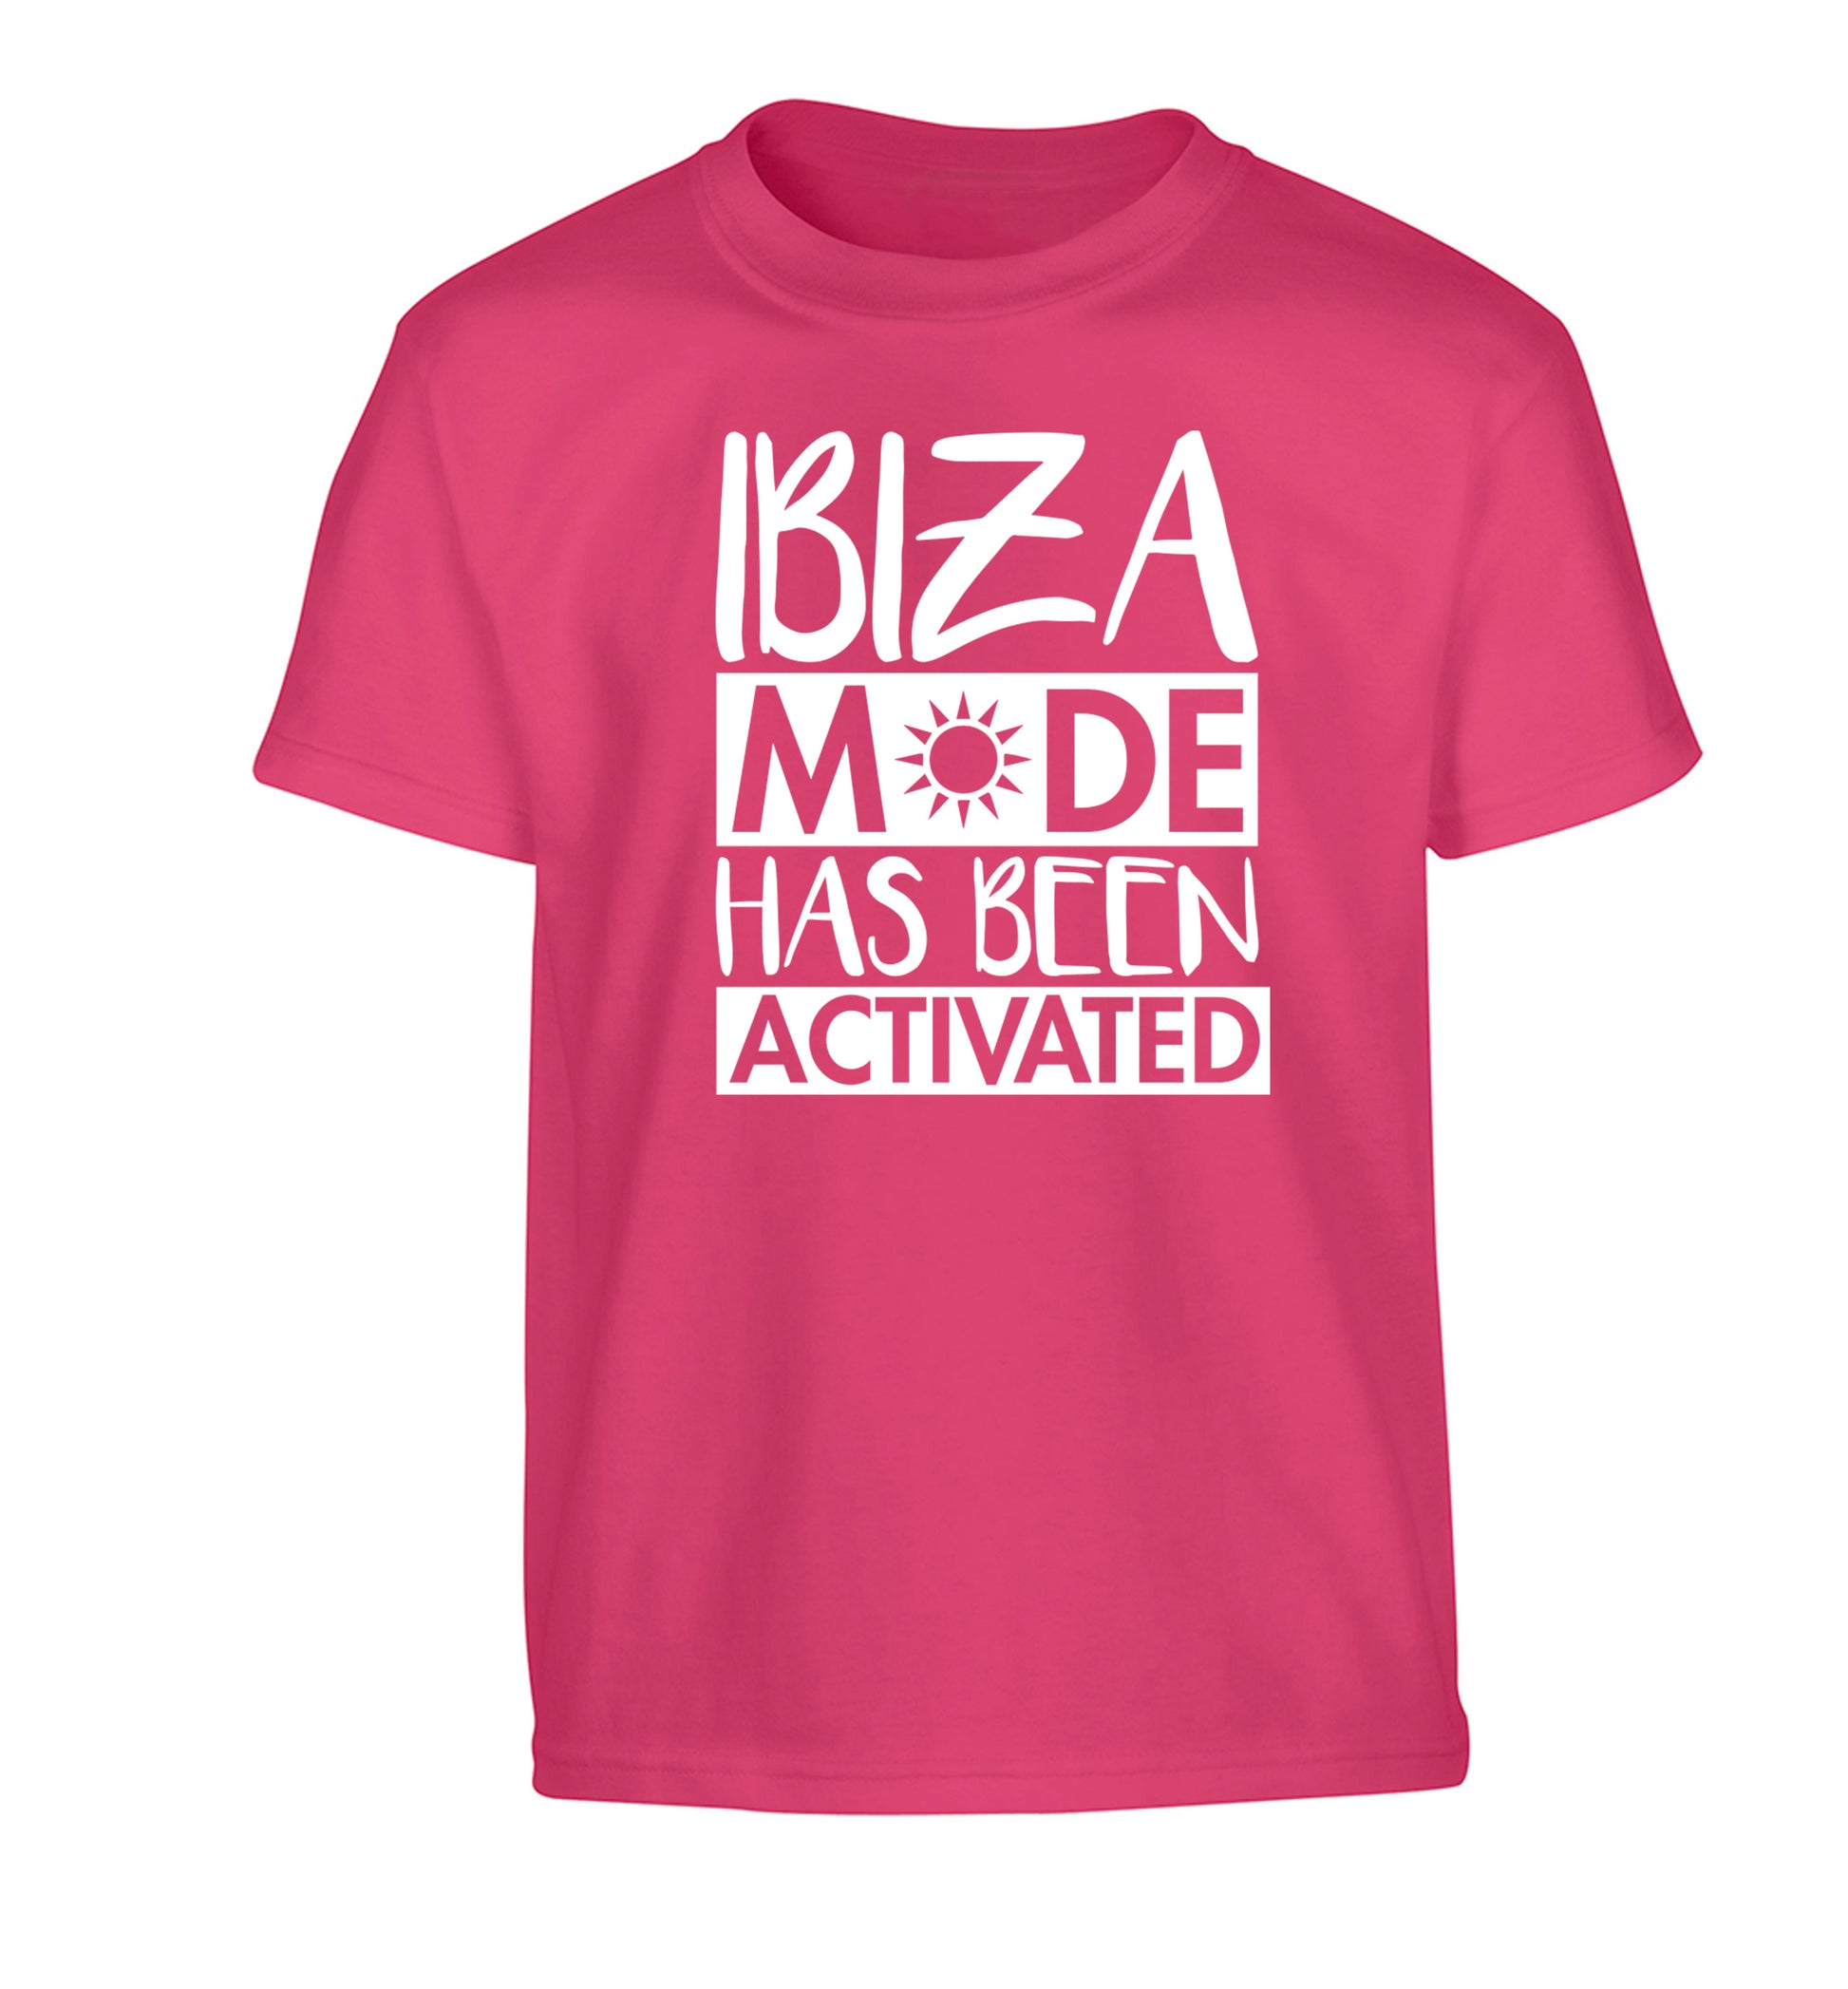 Ibiza mode has been activated Children's pink Tshirt 12-13 Years